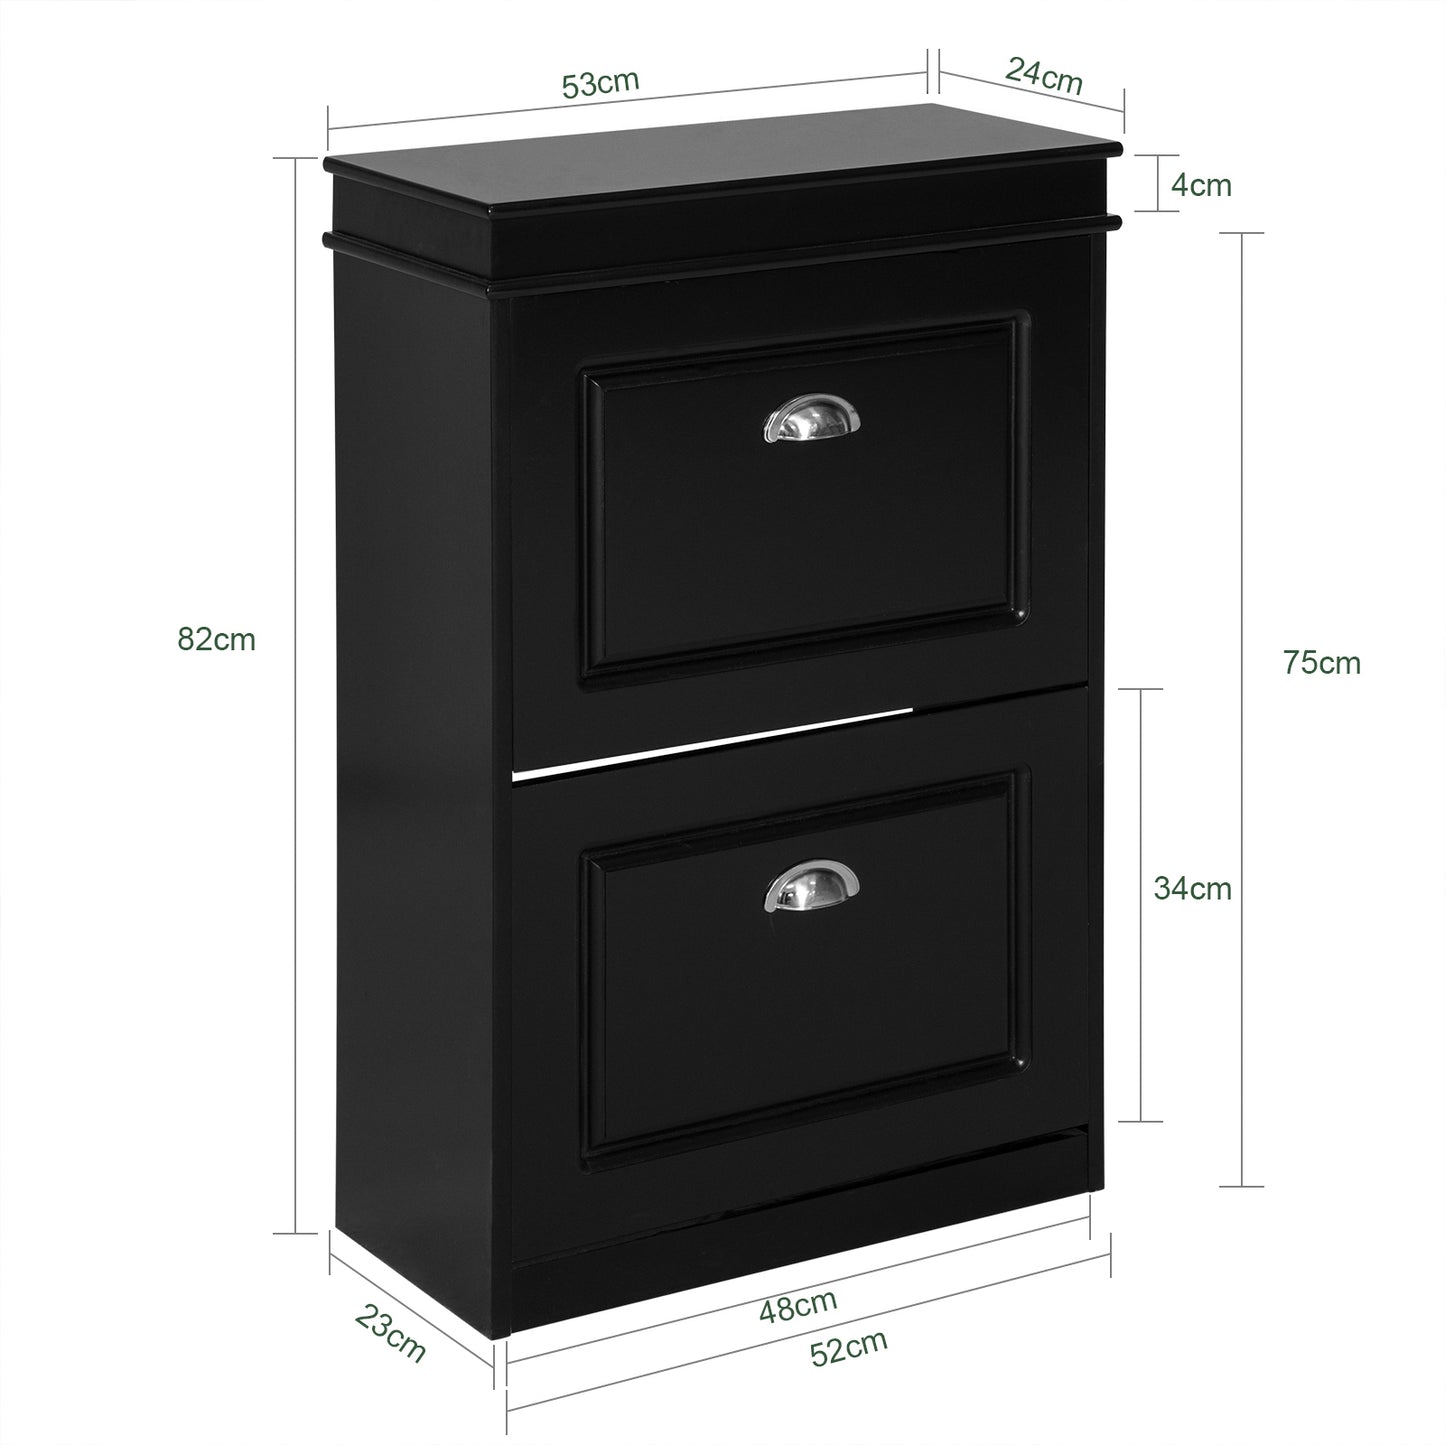 SoBuy FSR78-SCH Shoe Cabinet with 2 Tilt-Out Drawers Shoe Rack Shoe Storage Cupboard Organizer Unit Black